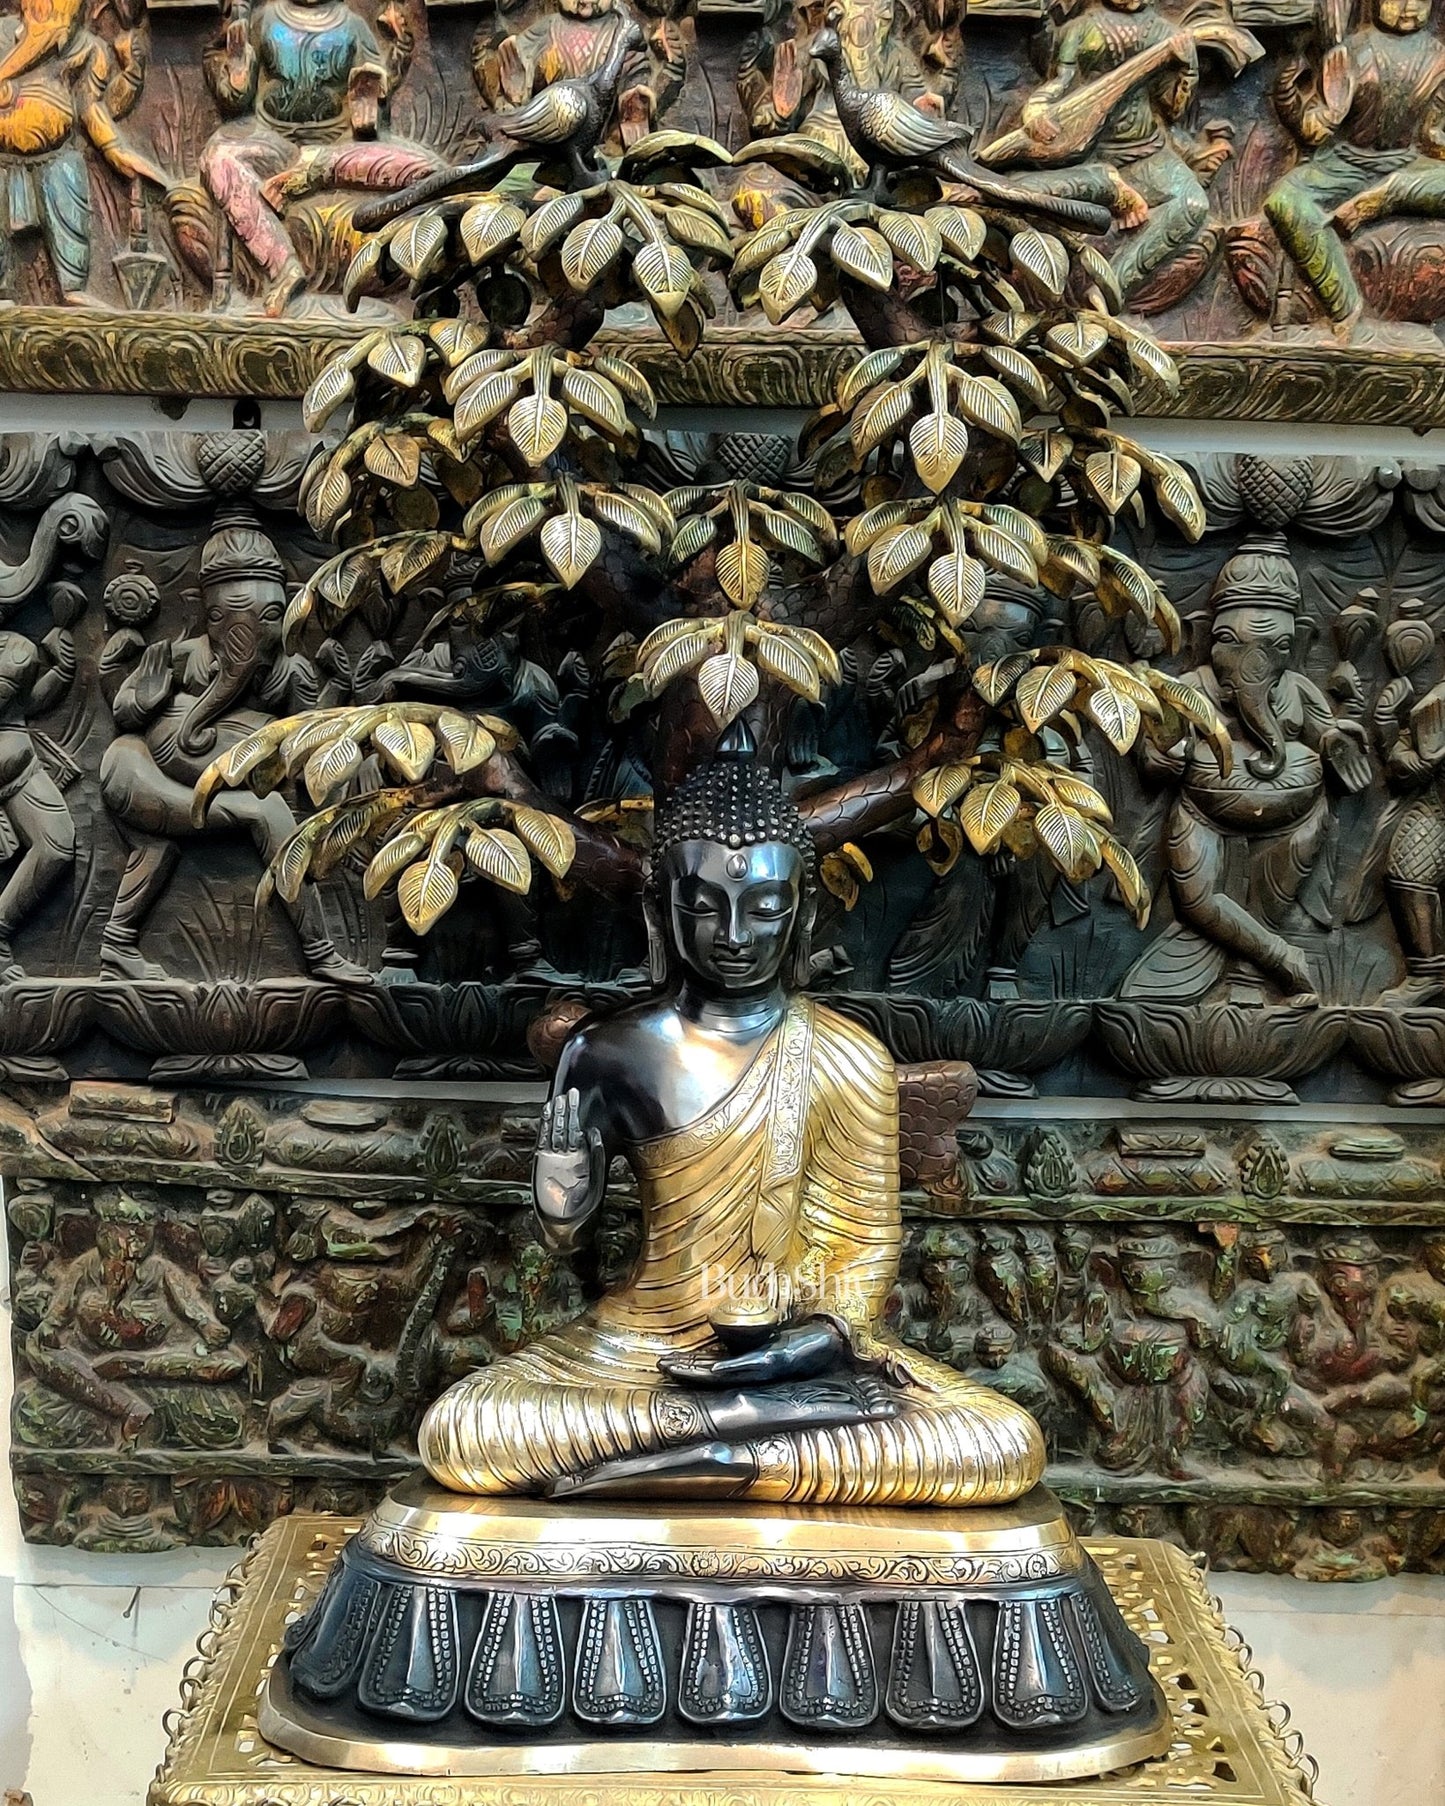 Brass Buddha Statue Under Tree - 32 inch - Budhshiv.com